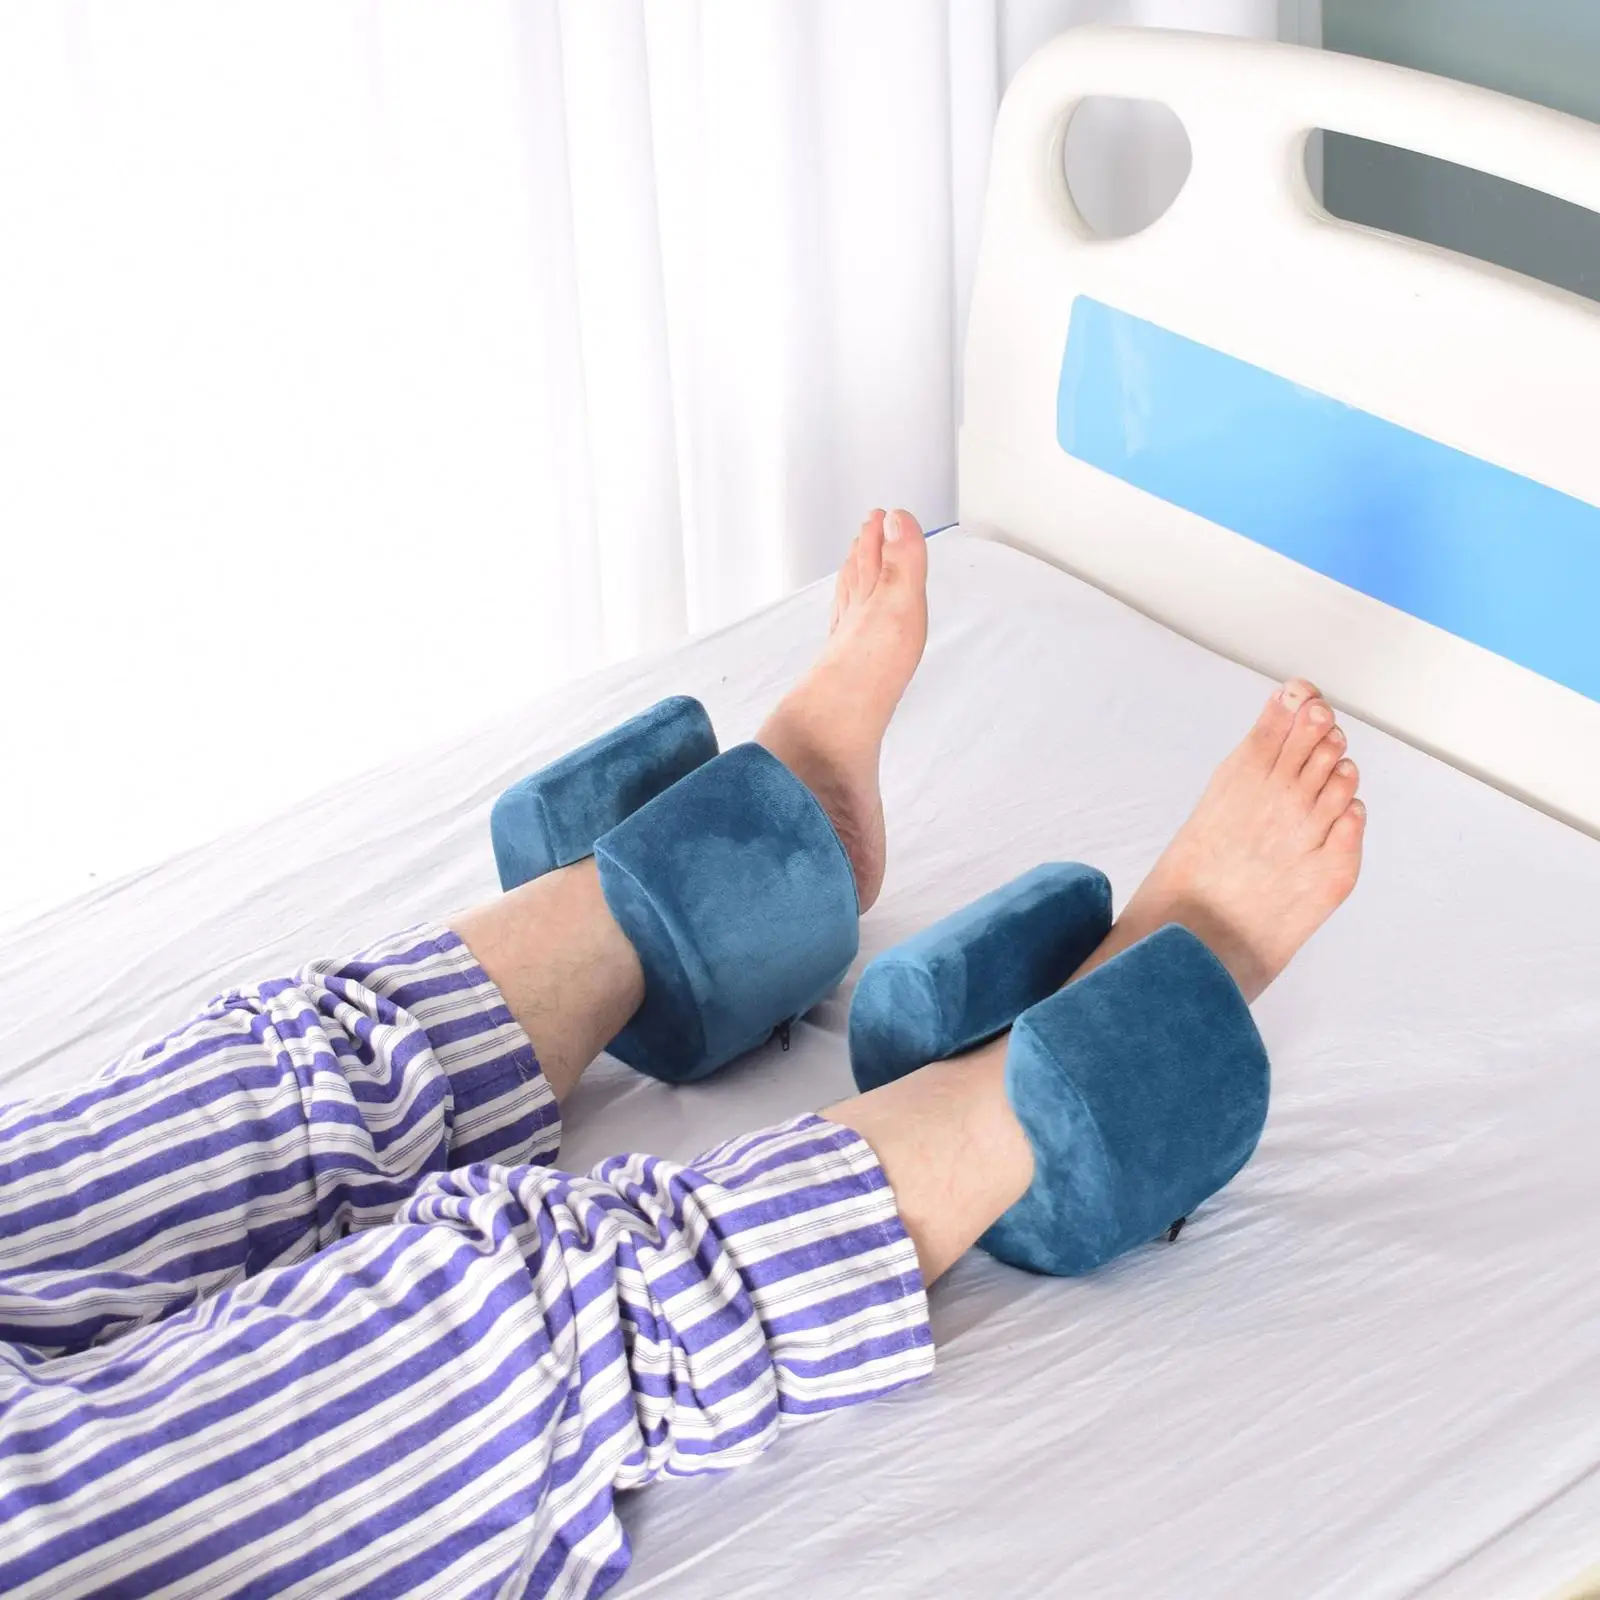 https://ae01.alicdn.com/kf/Sc46cc81db12f42ae8617aedd0b3986aco/Washable-Foot-Pillows-Feet-Sleeping-Elevated-for-Bedridden-Patient-Ankle-Heel-Knee-Protector-Anti-Cushion.jpg